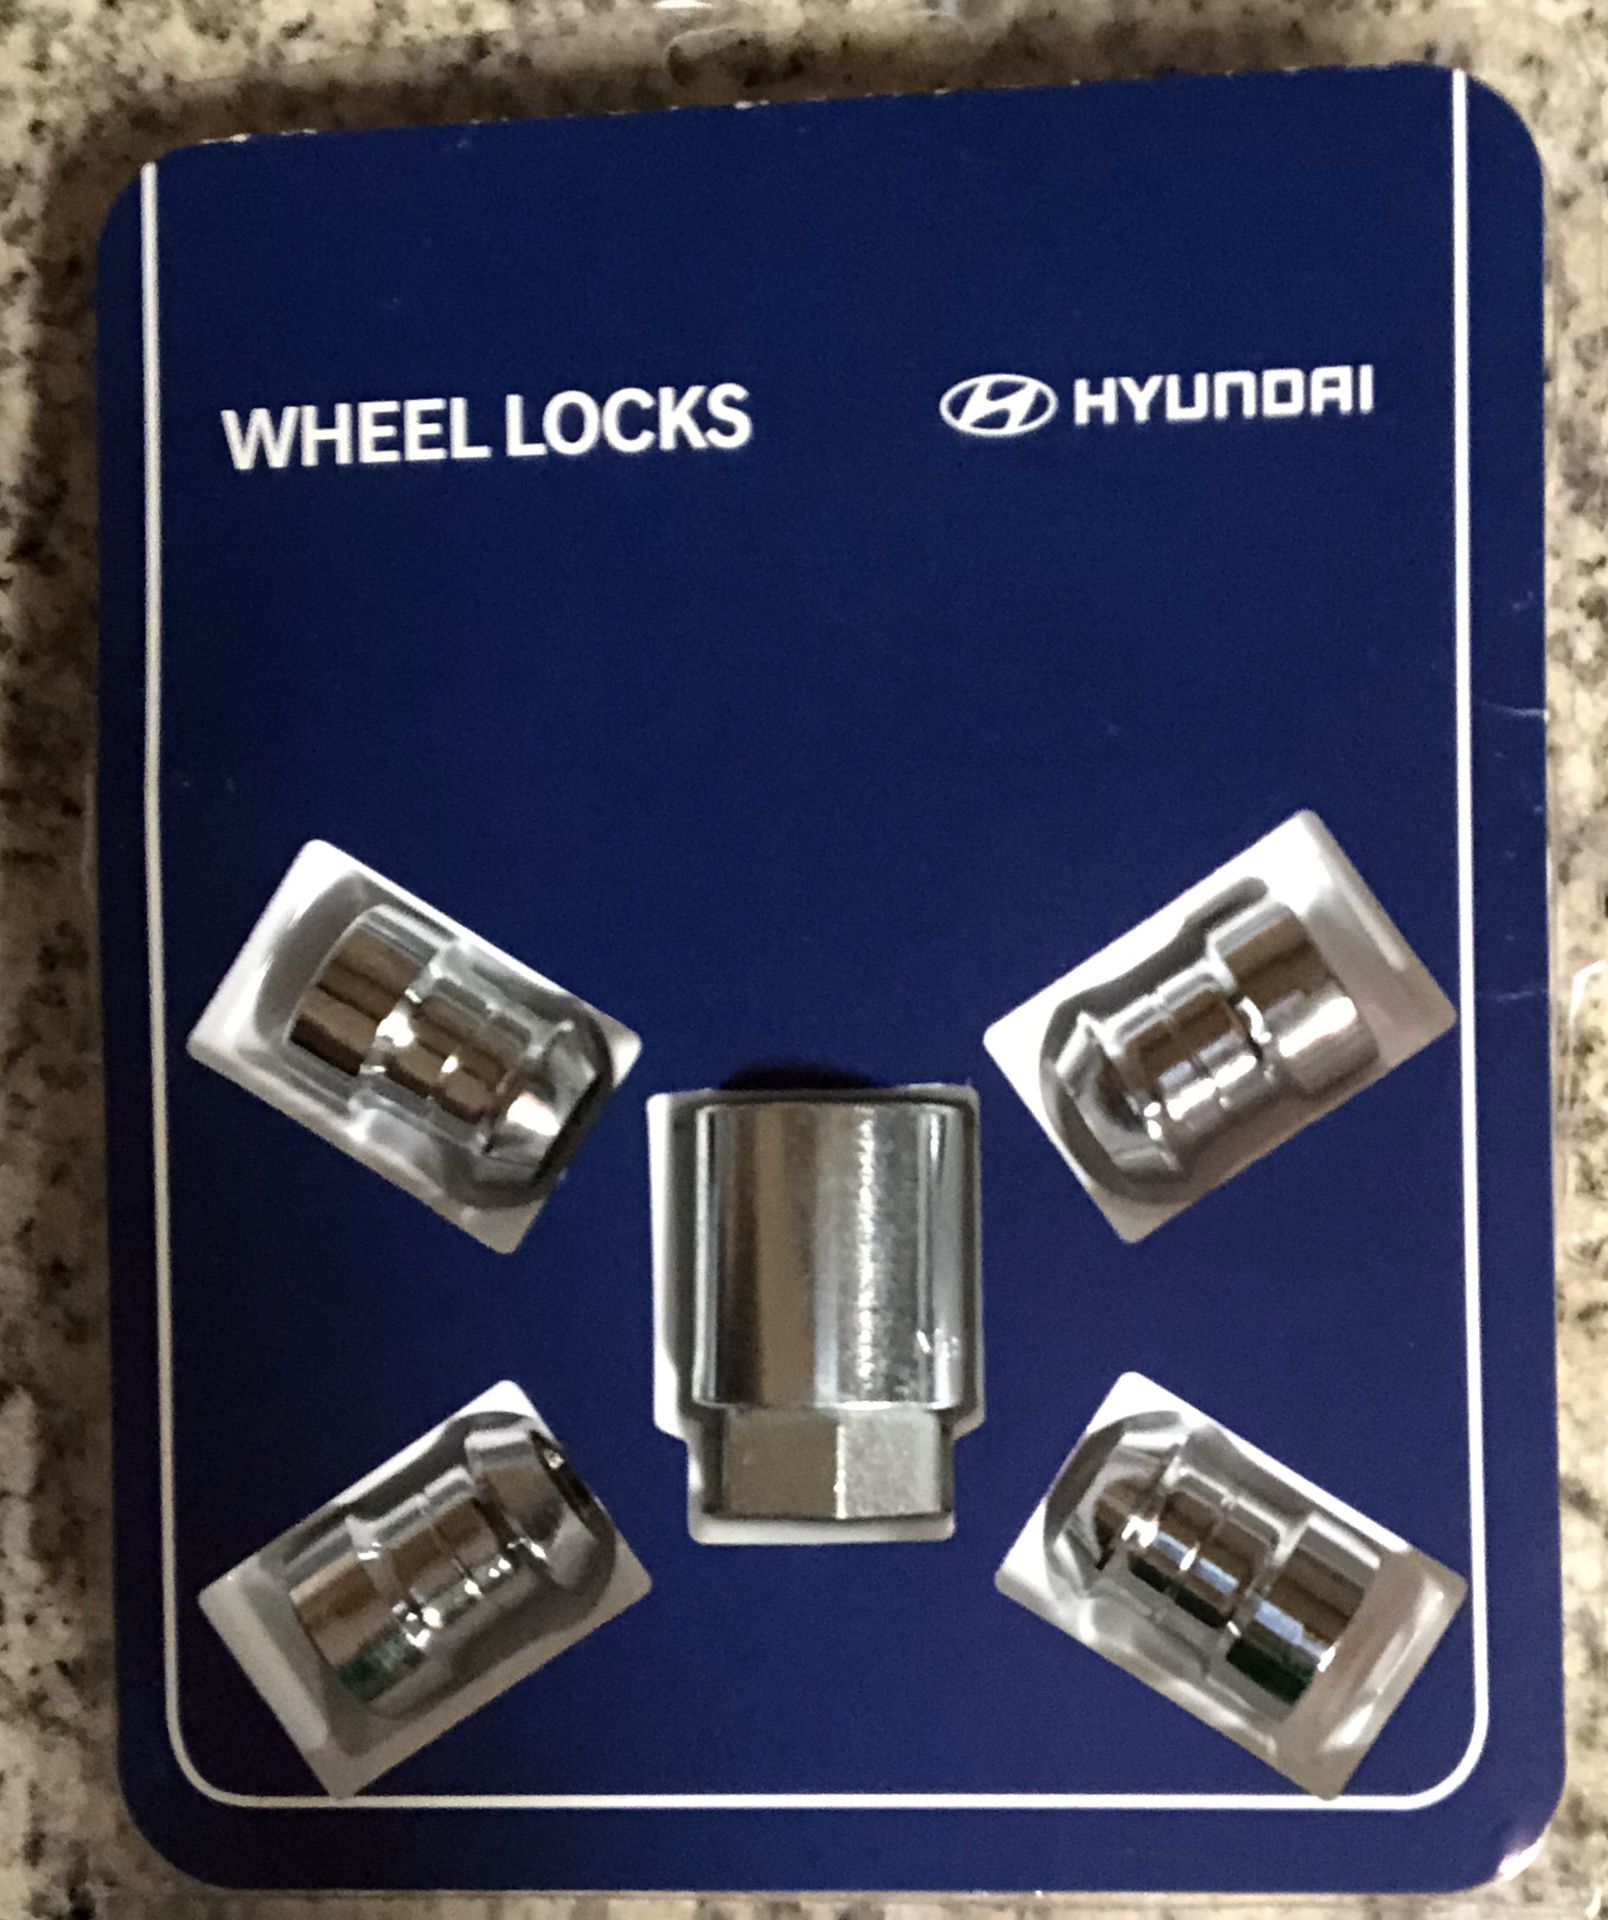 Hyundai Tire Wheel Locks